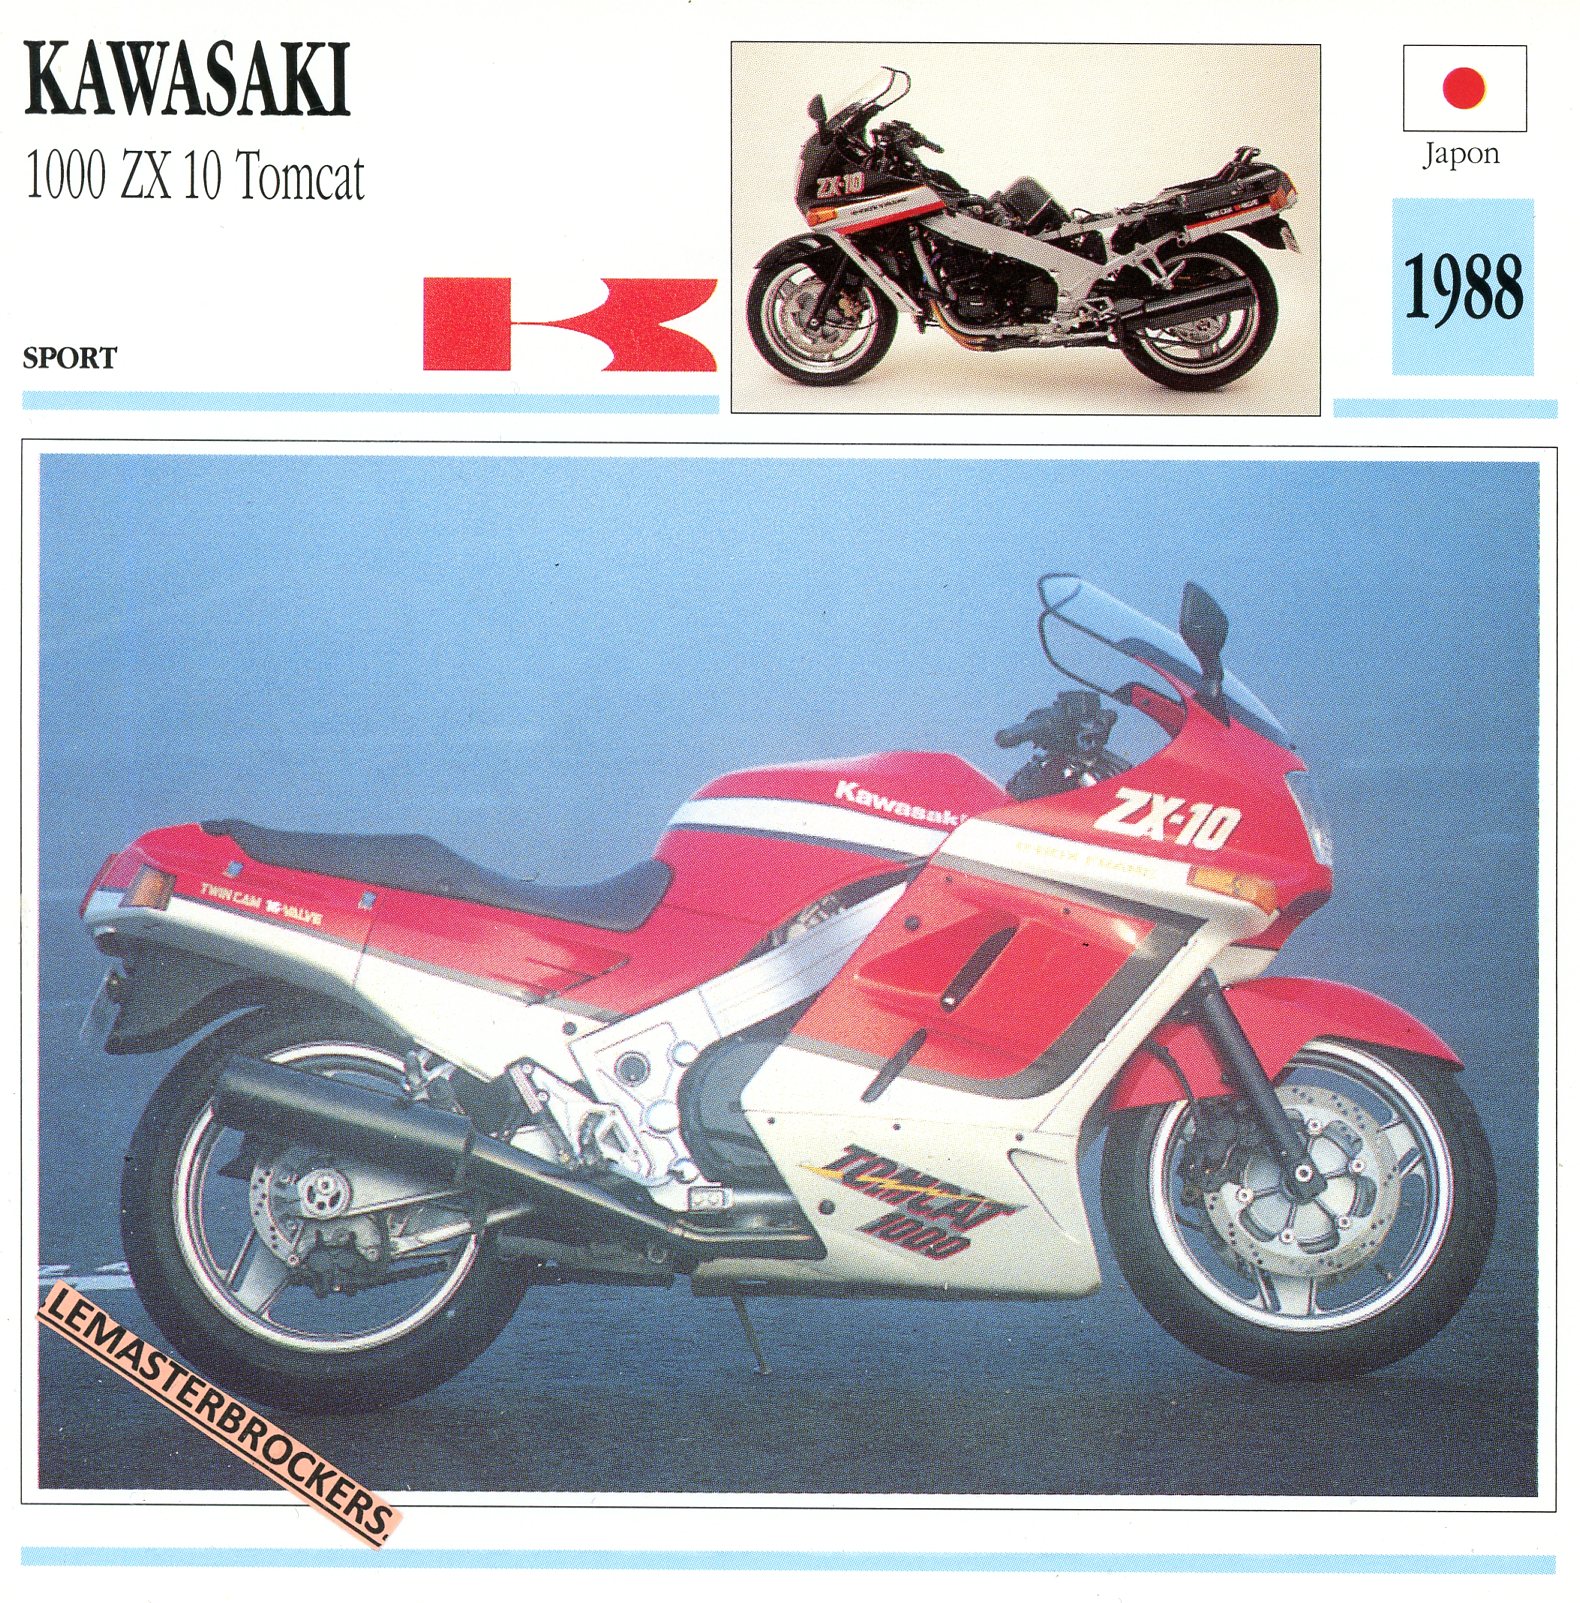 KAWASAKI-1000-ZX-TOMCAT-FICHE-MOTO-ATLAS-lemasterbrockers-CARD-MOTORCYCLE